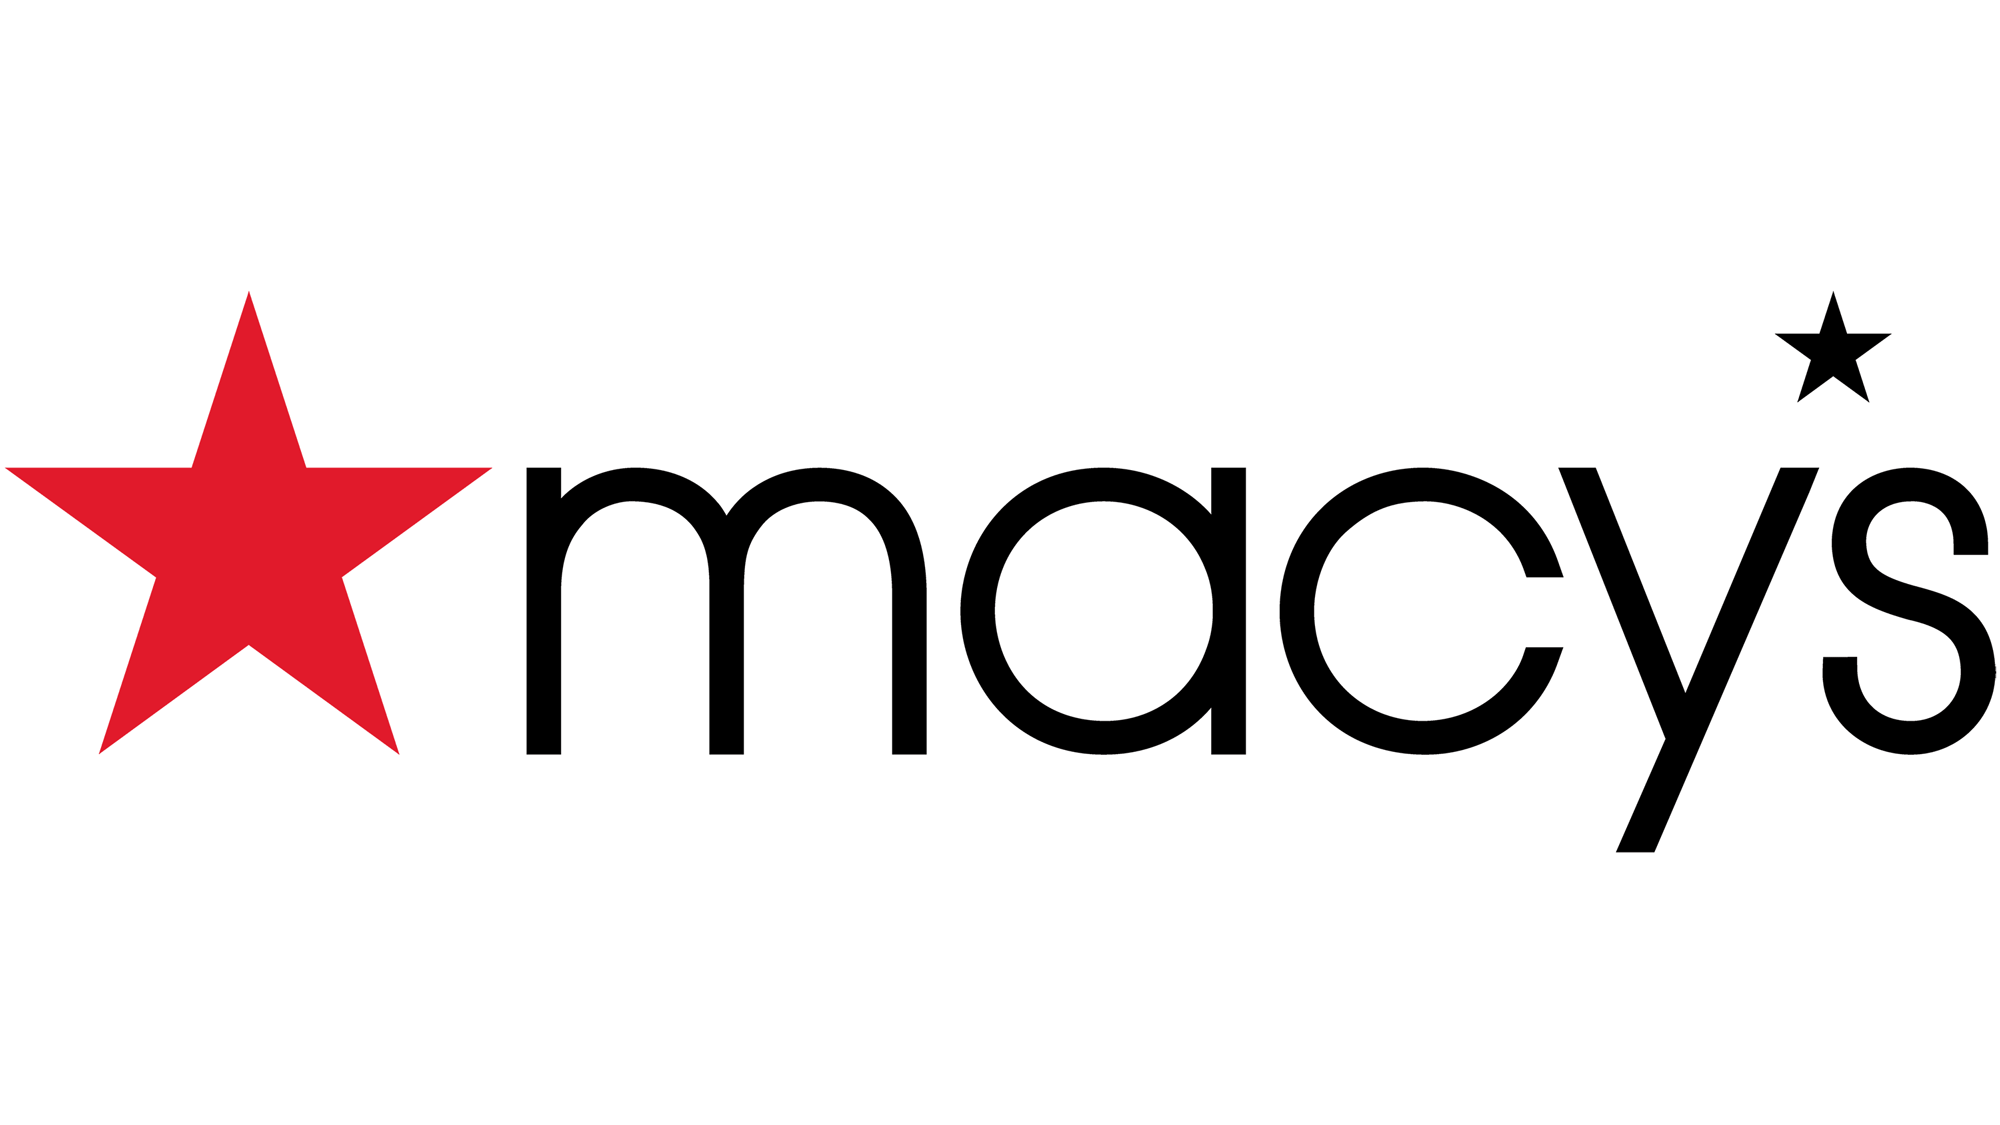 Macys logo 2021